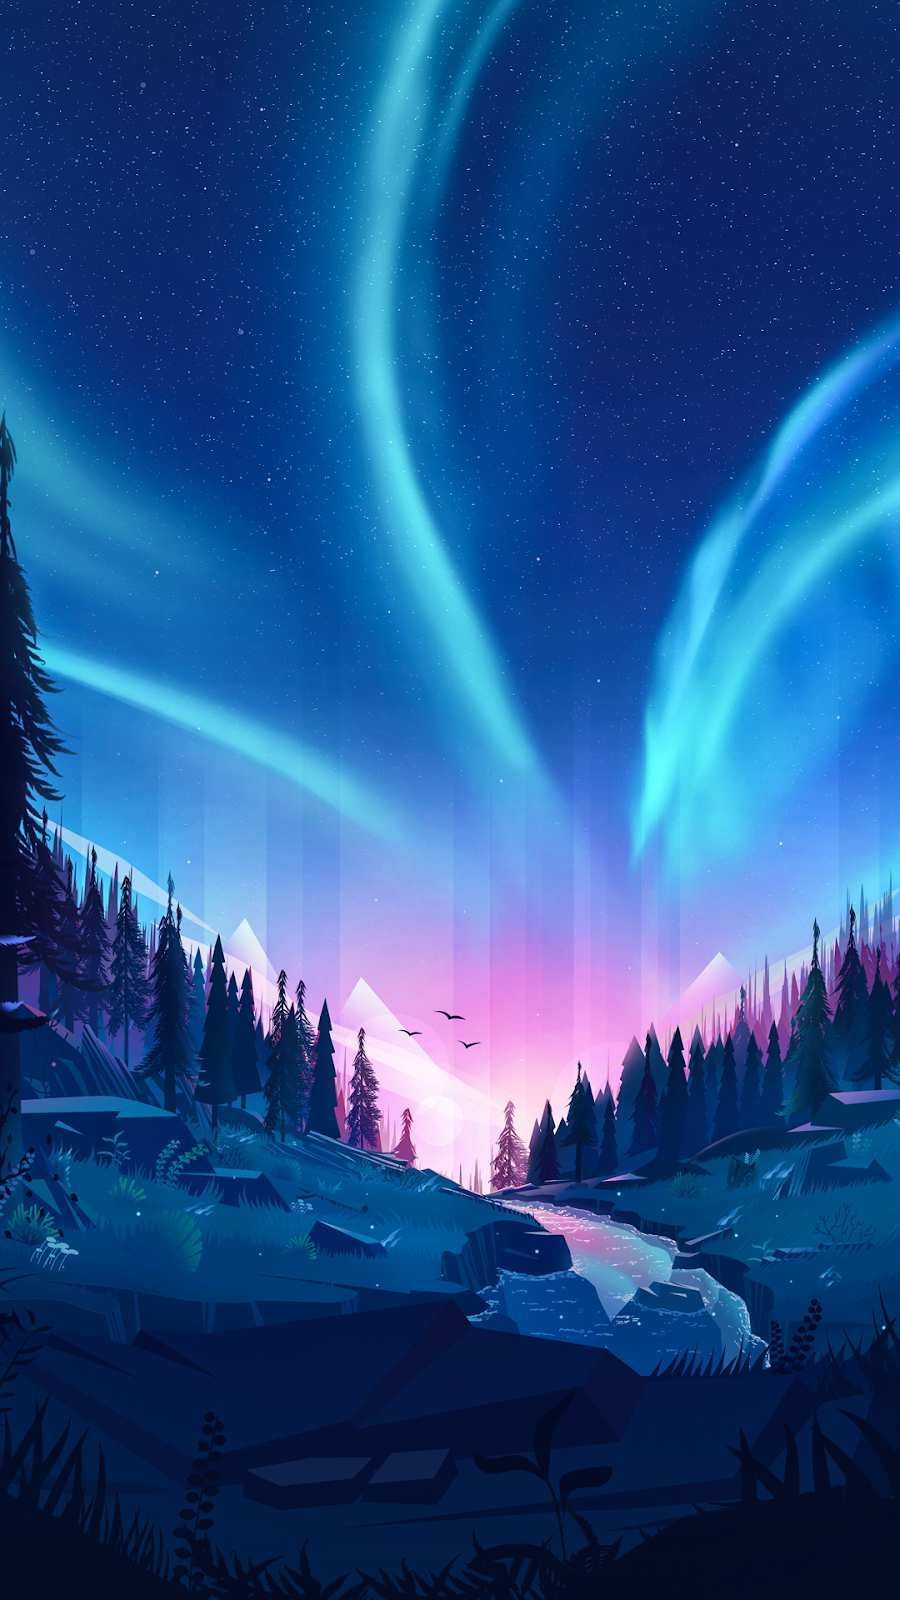 Sky Aurora Borealis Wallpapers